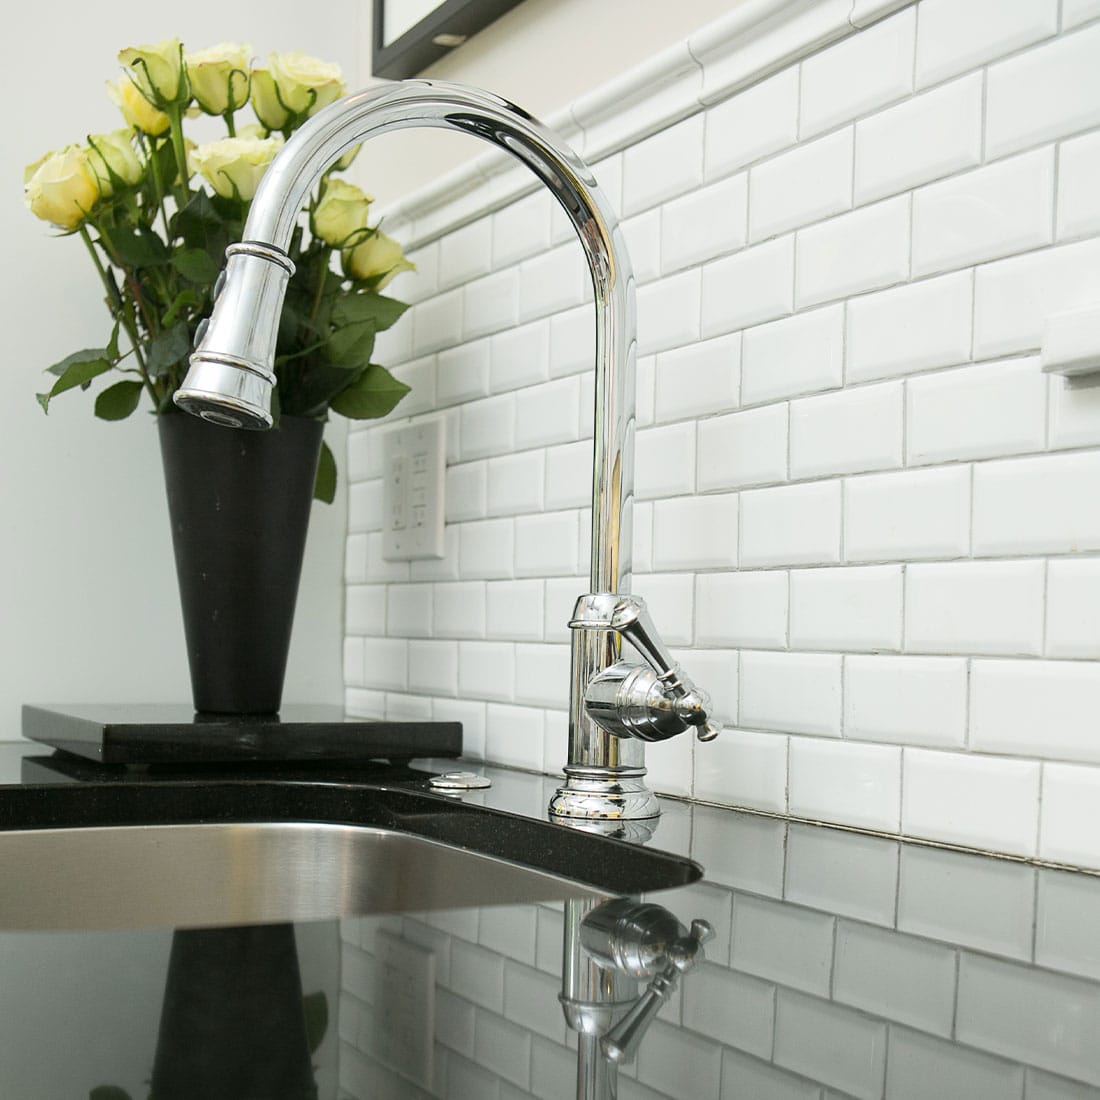 subway tile backsplash behind modern chrome faucet on black marble countertops in renovated kitchen